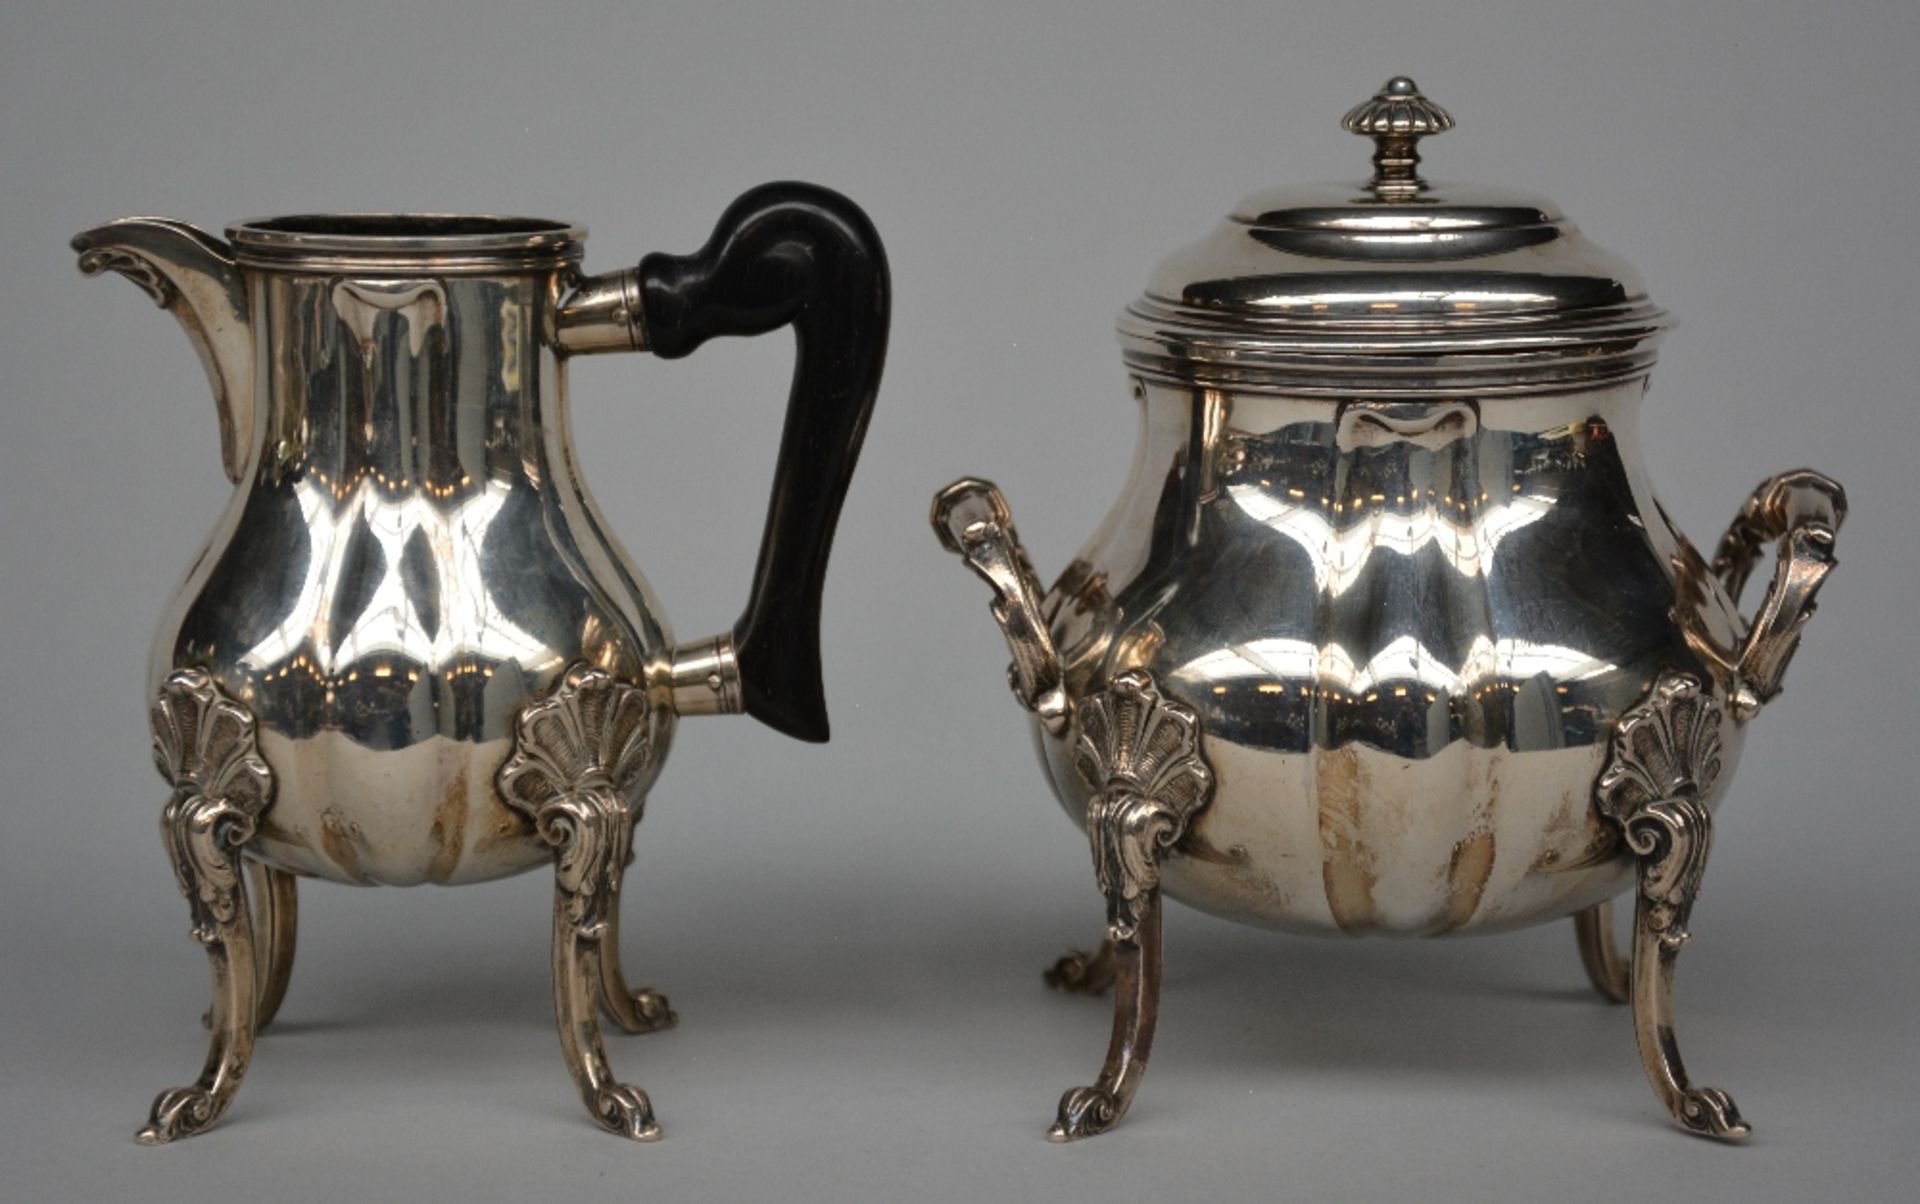 A four-piece silver coffee and tea set, Belgium 1868 - 1942, 800/000, makers' mark, Delheid, H - Bild 2 aus 4